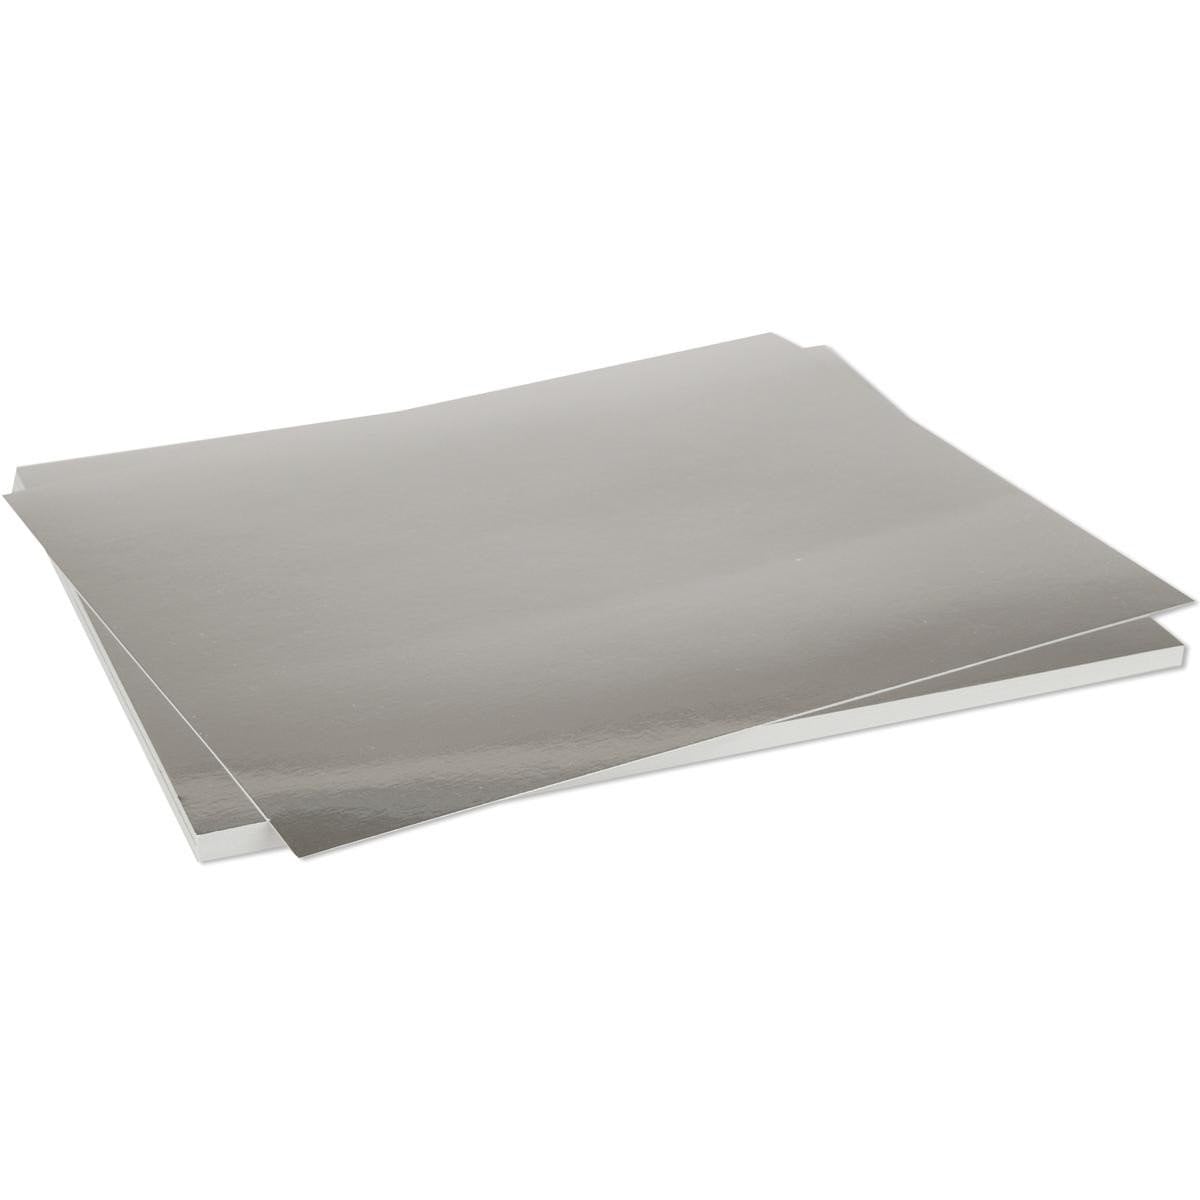 SILVER Matte Foil Board - 12x12 Bazzill Specialty Cardstock